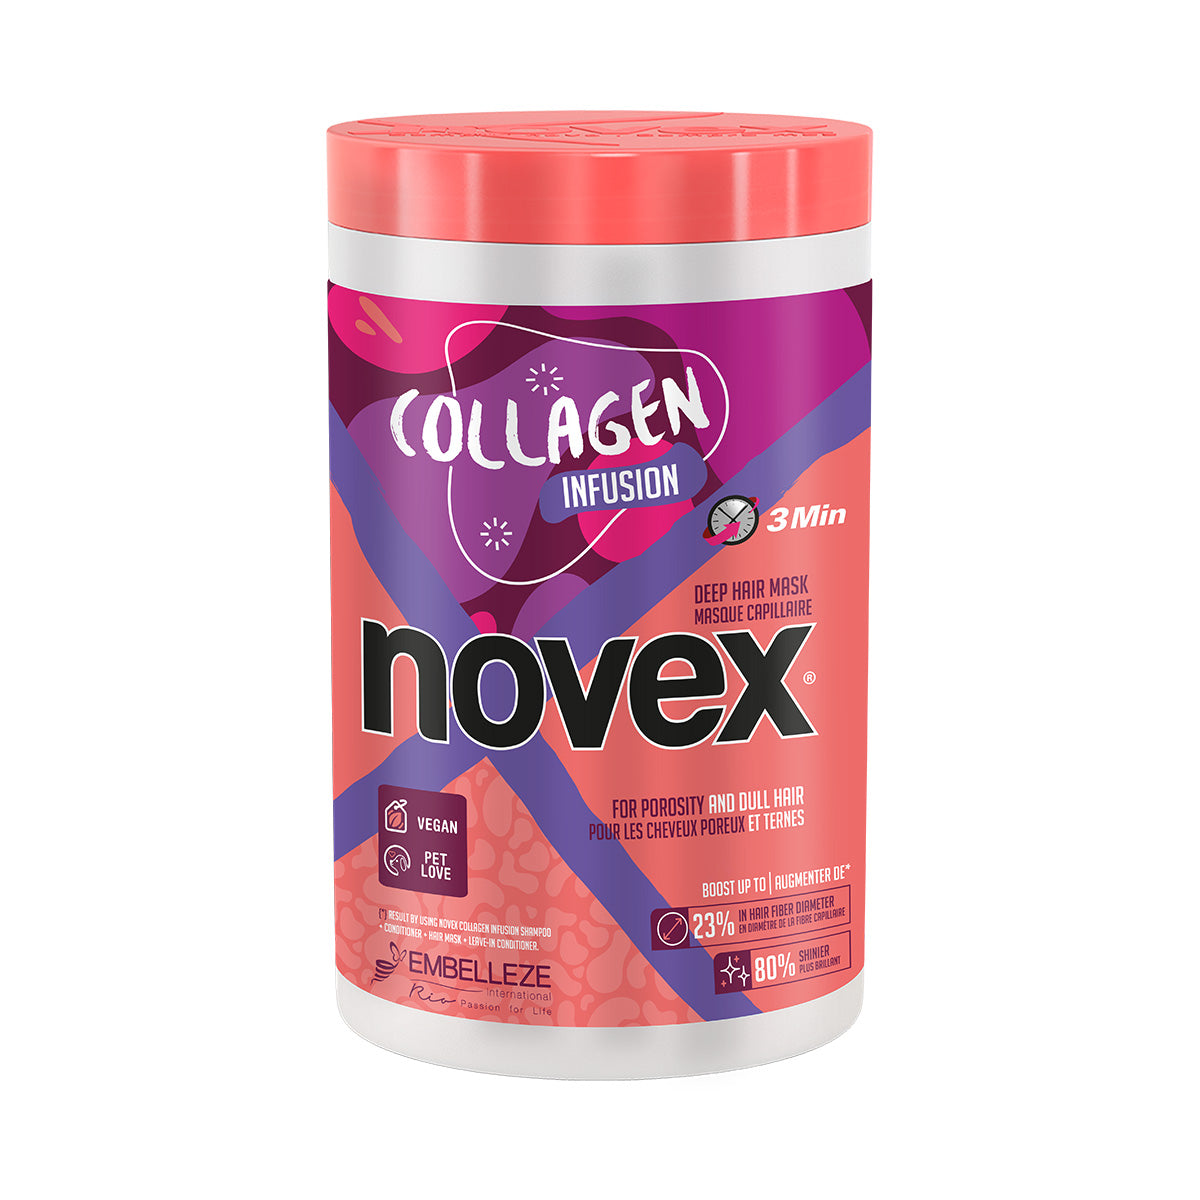 巴西 Novex 膠原蛋白修護護髮膜 Novex Infused Collagen Hair Mask 14oz